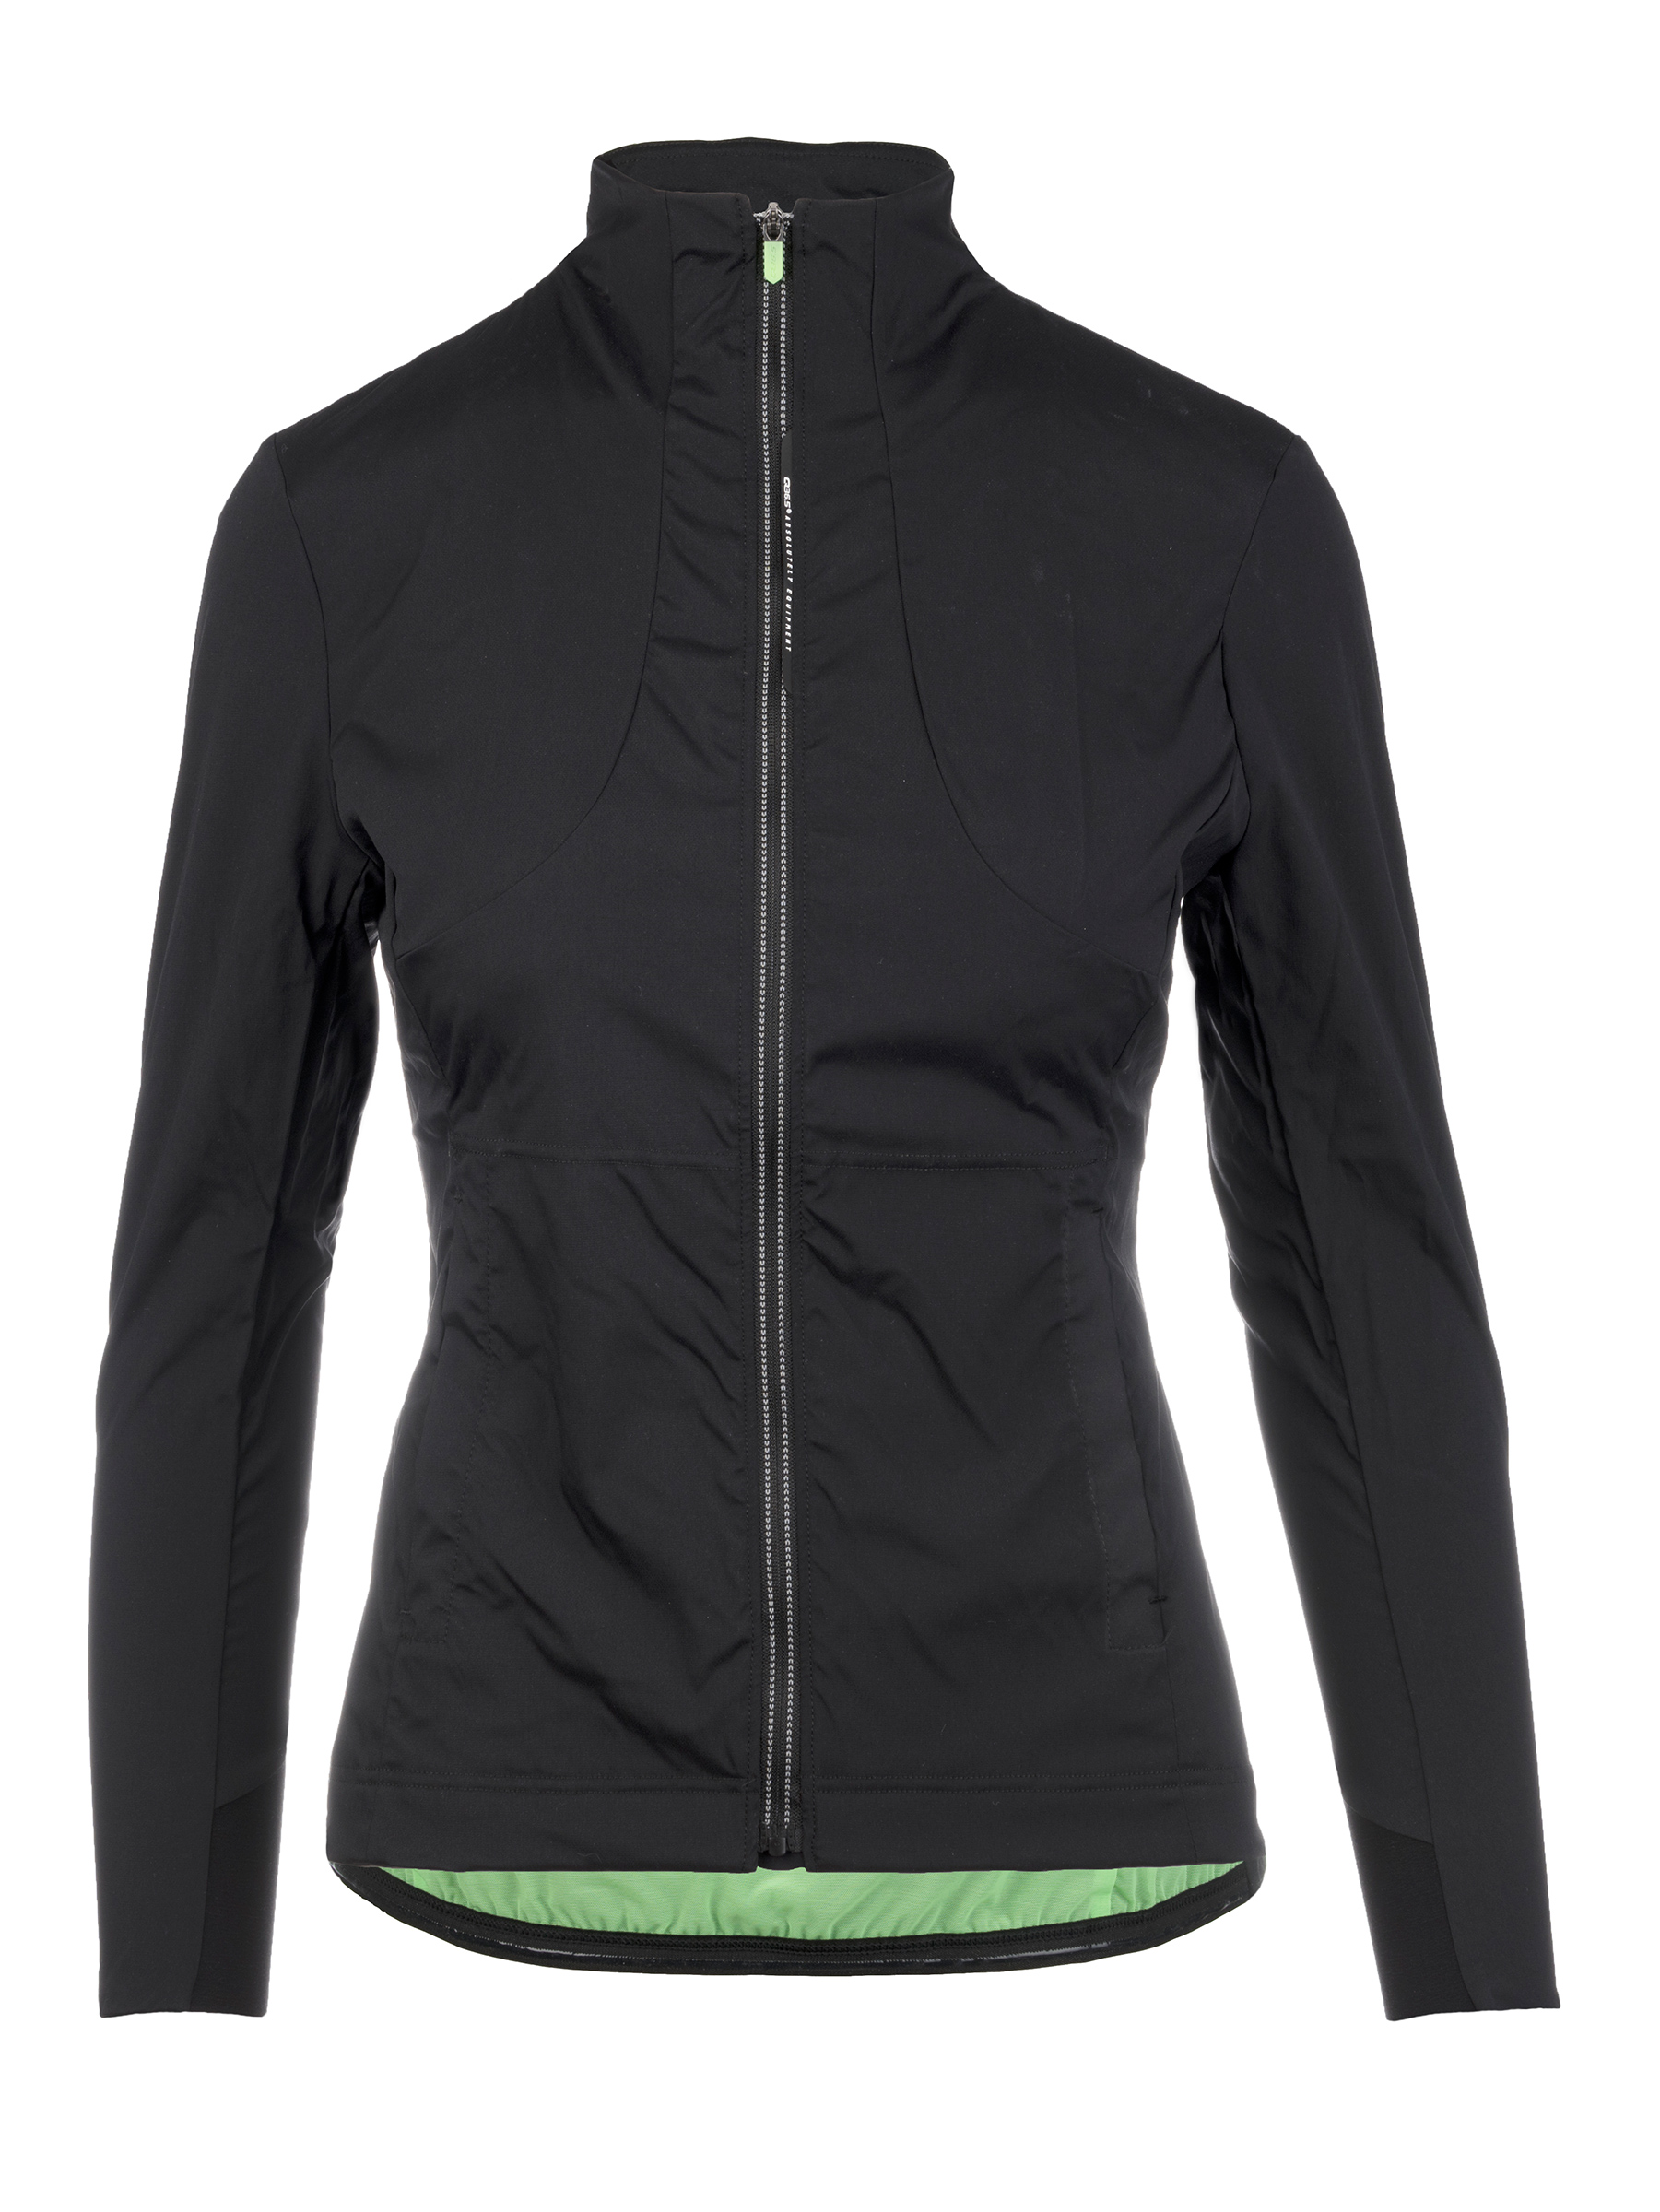 Womens jacket: casual active sport jacket